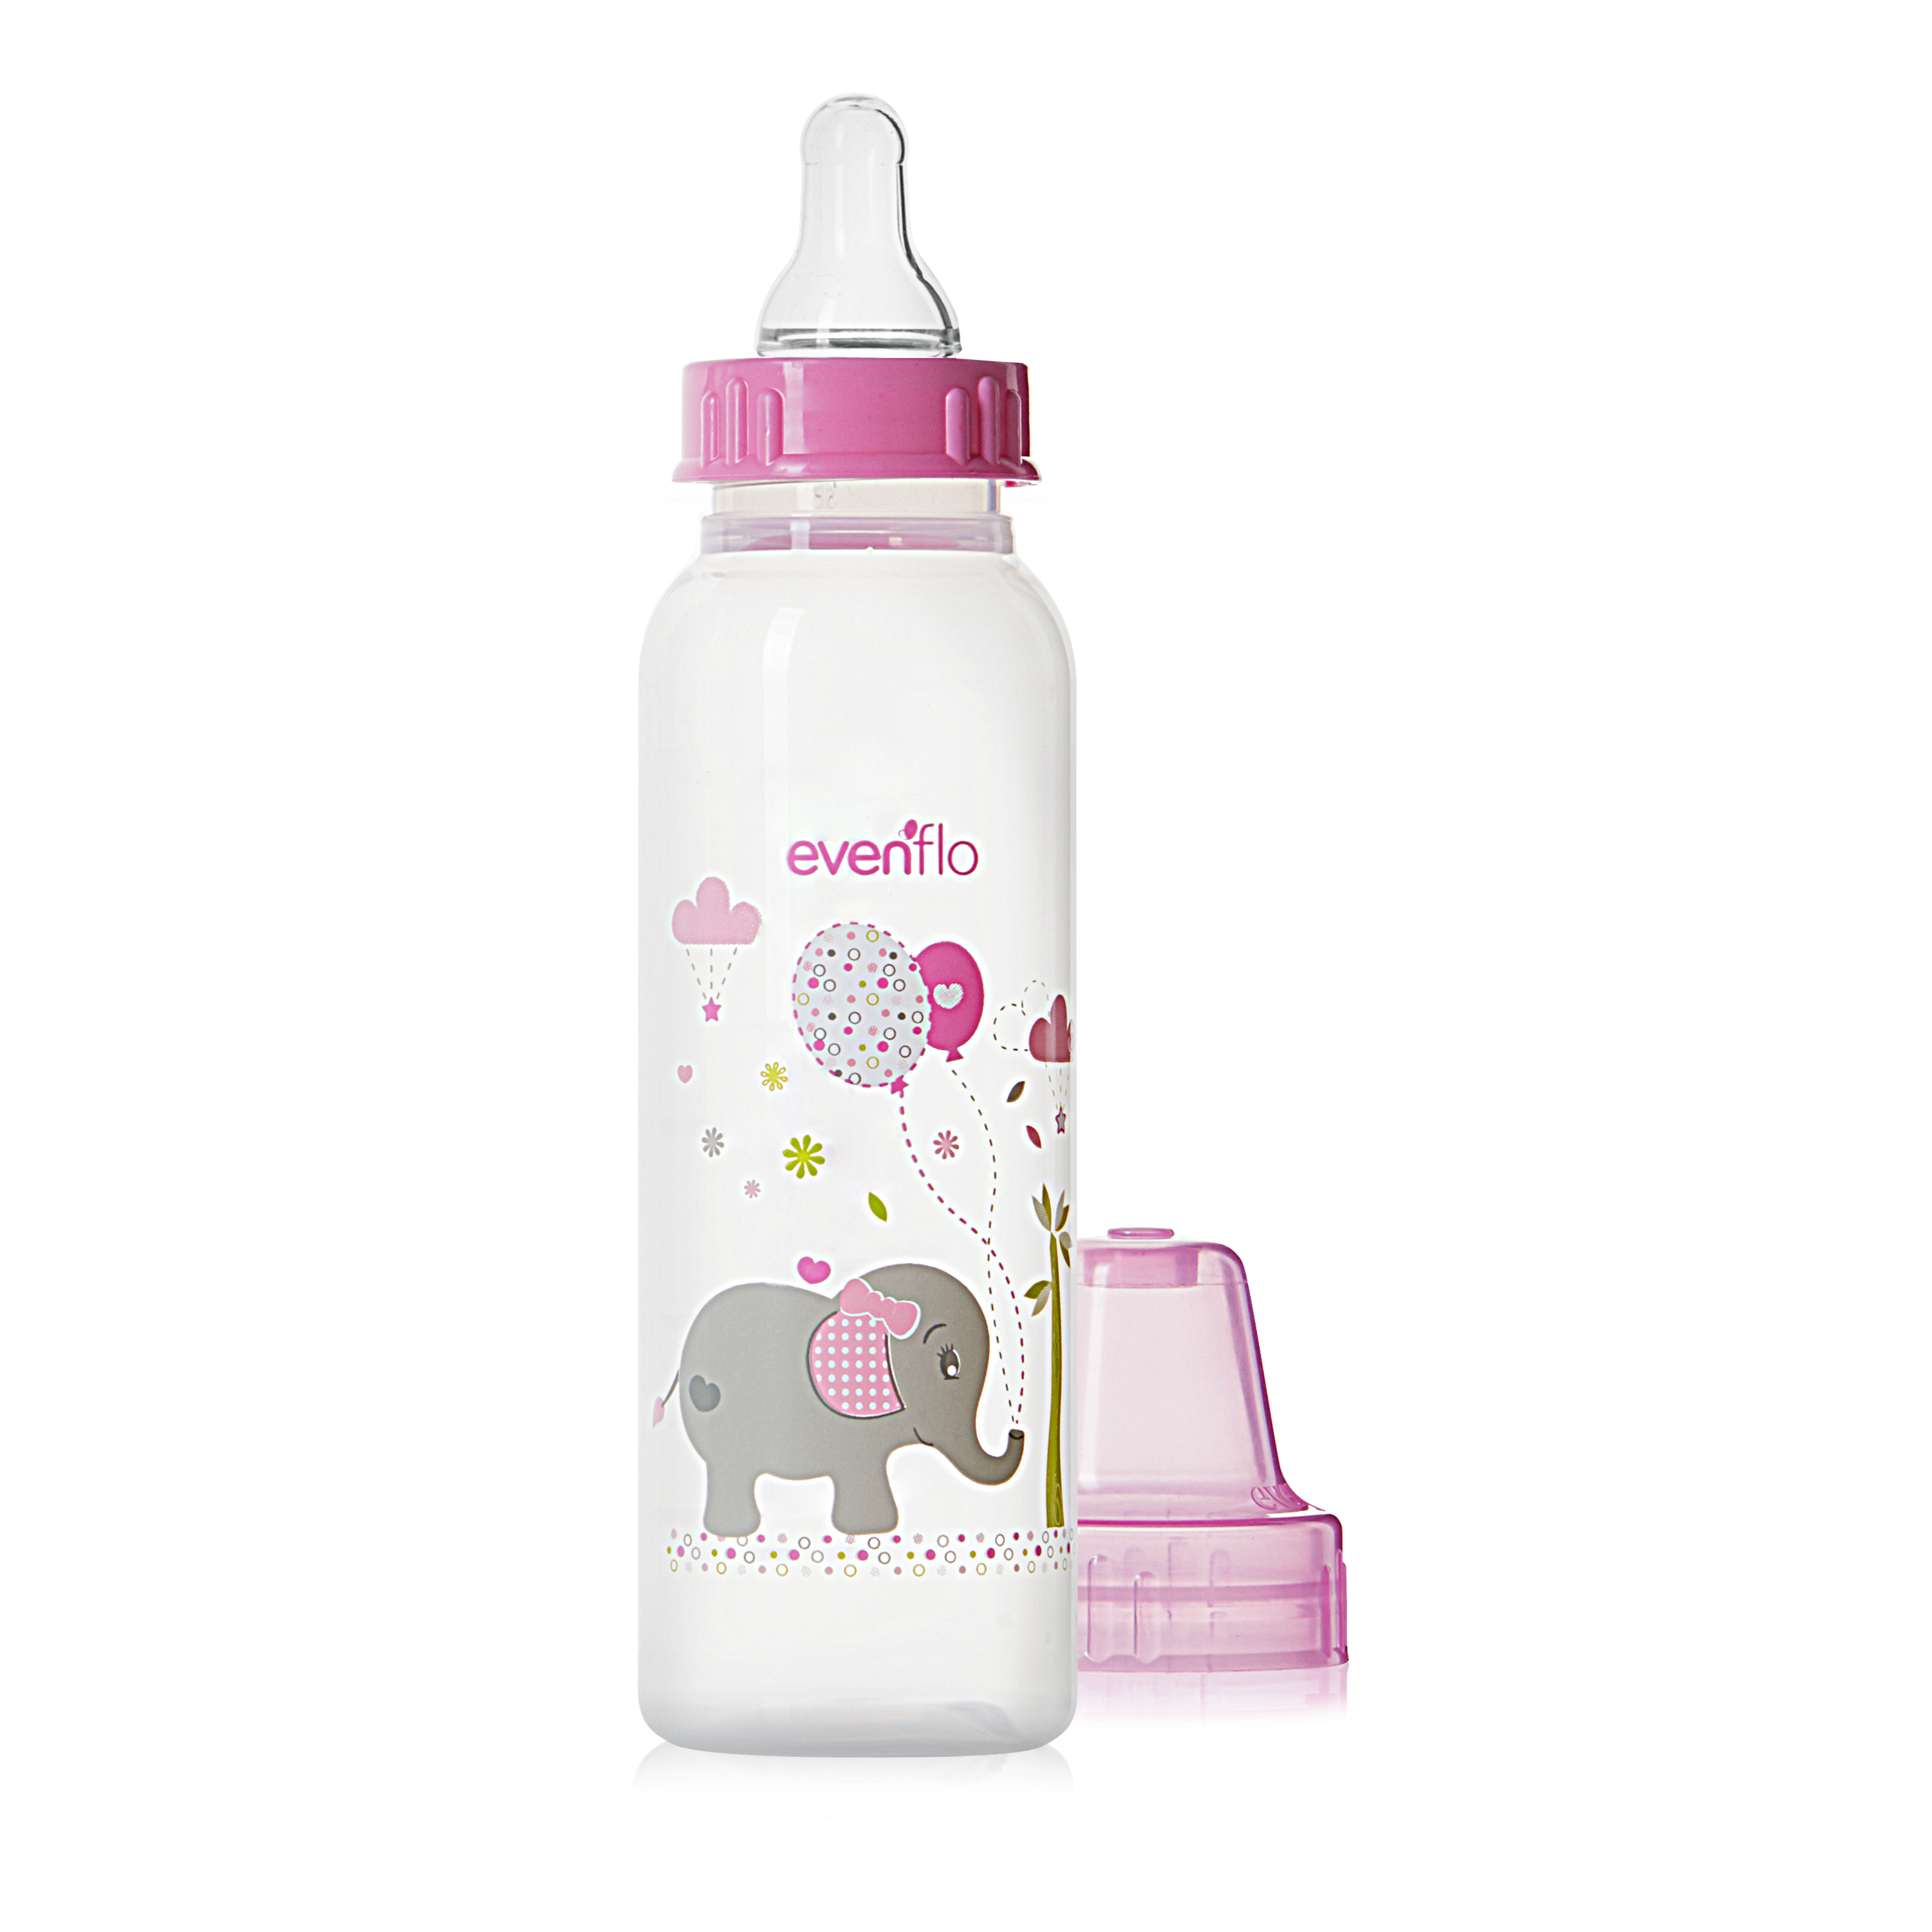 Evenflo Feeding Classic Prints Polypropylene Baby Bottle for Infant and Newborn, 8 oz (12 Pack) - image 5 of 5